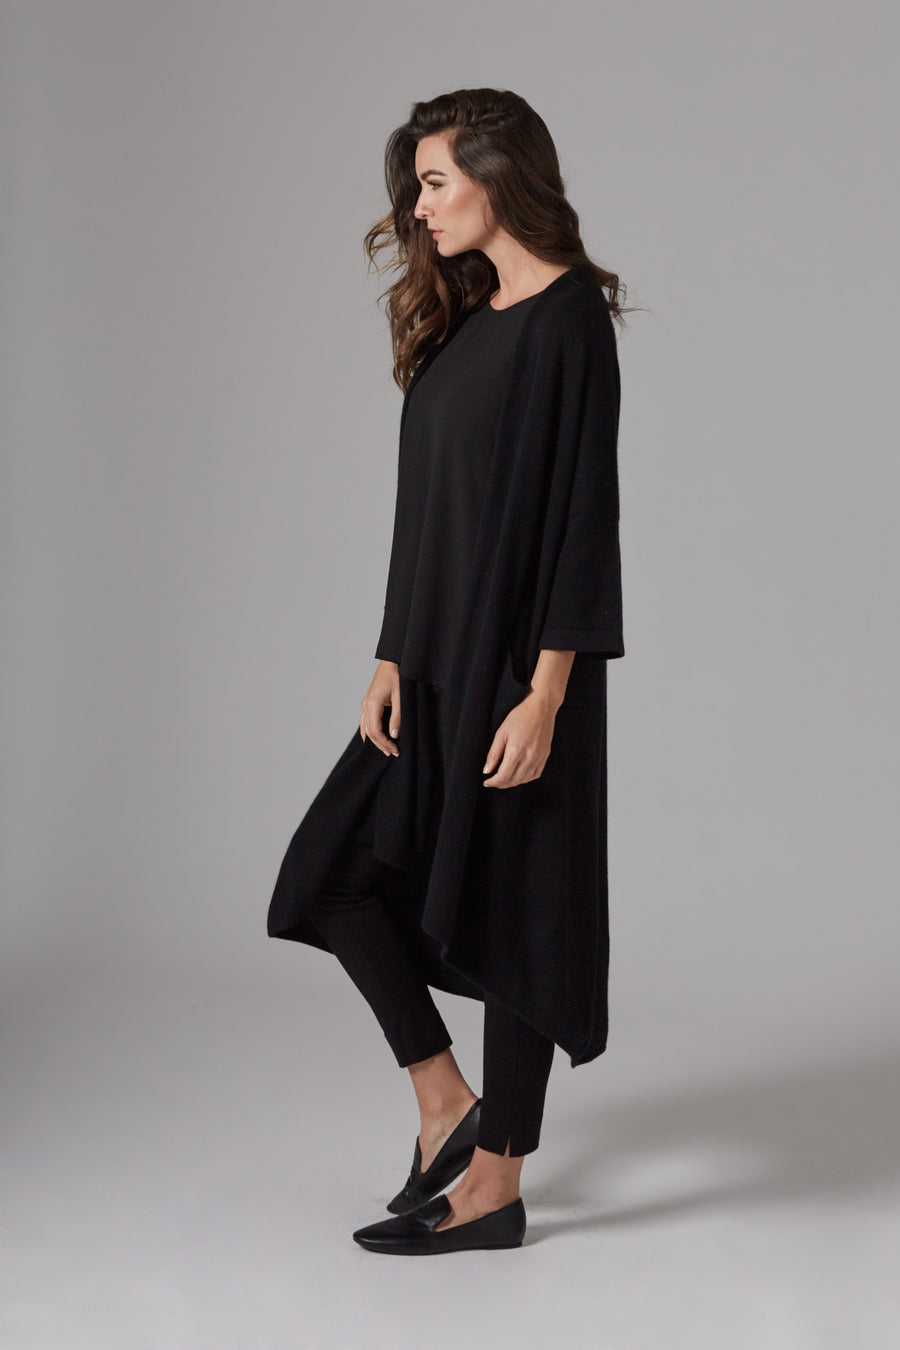 pine cashmere celine women's loose fit 100% pure cashmere cardigan coat in black